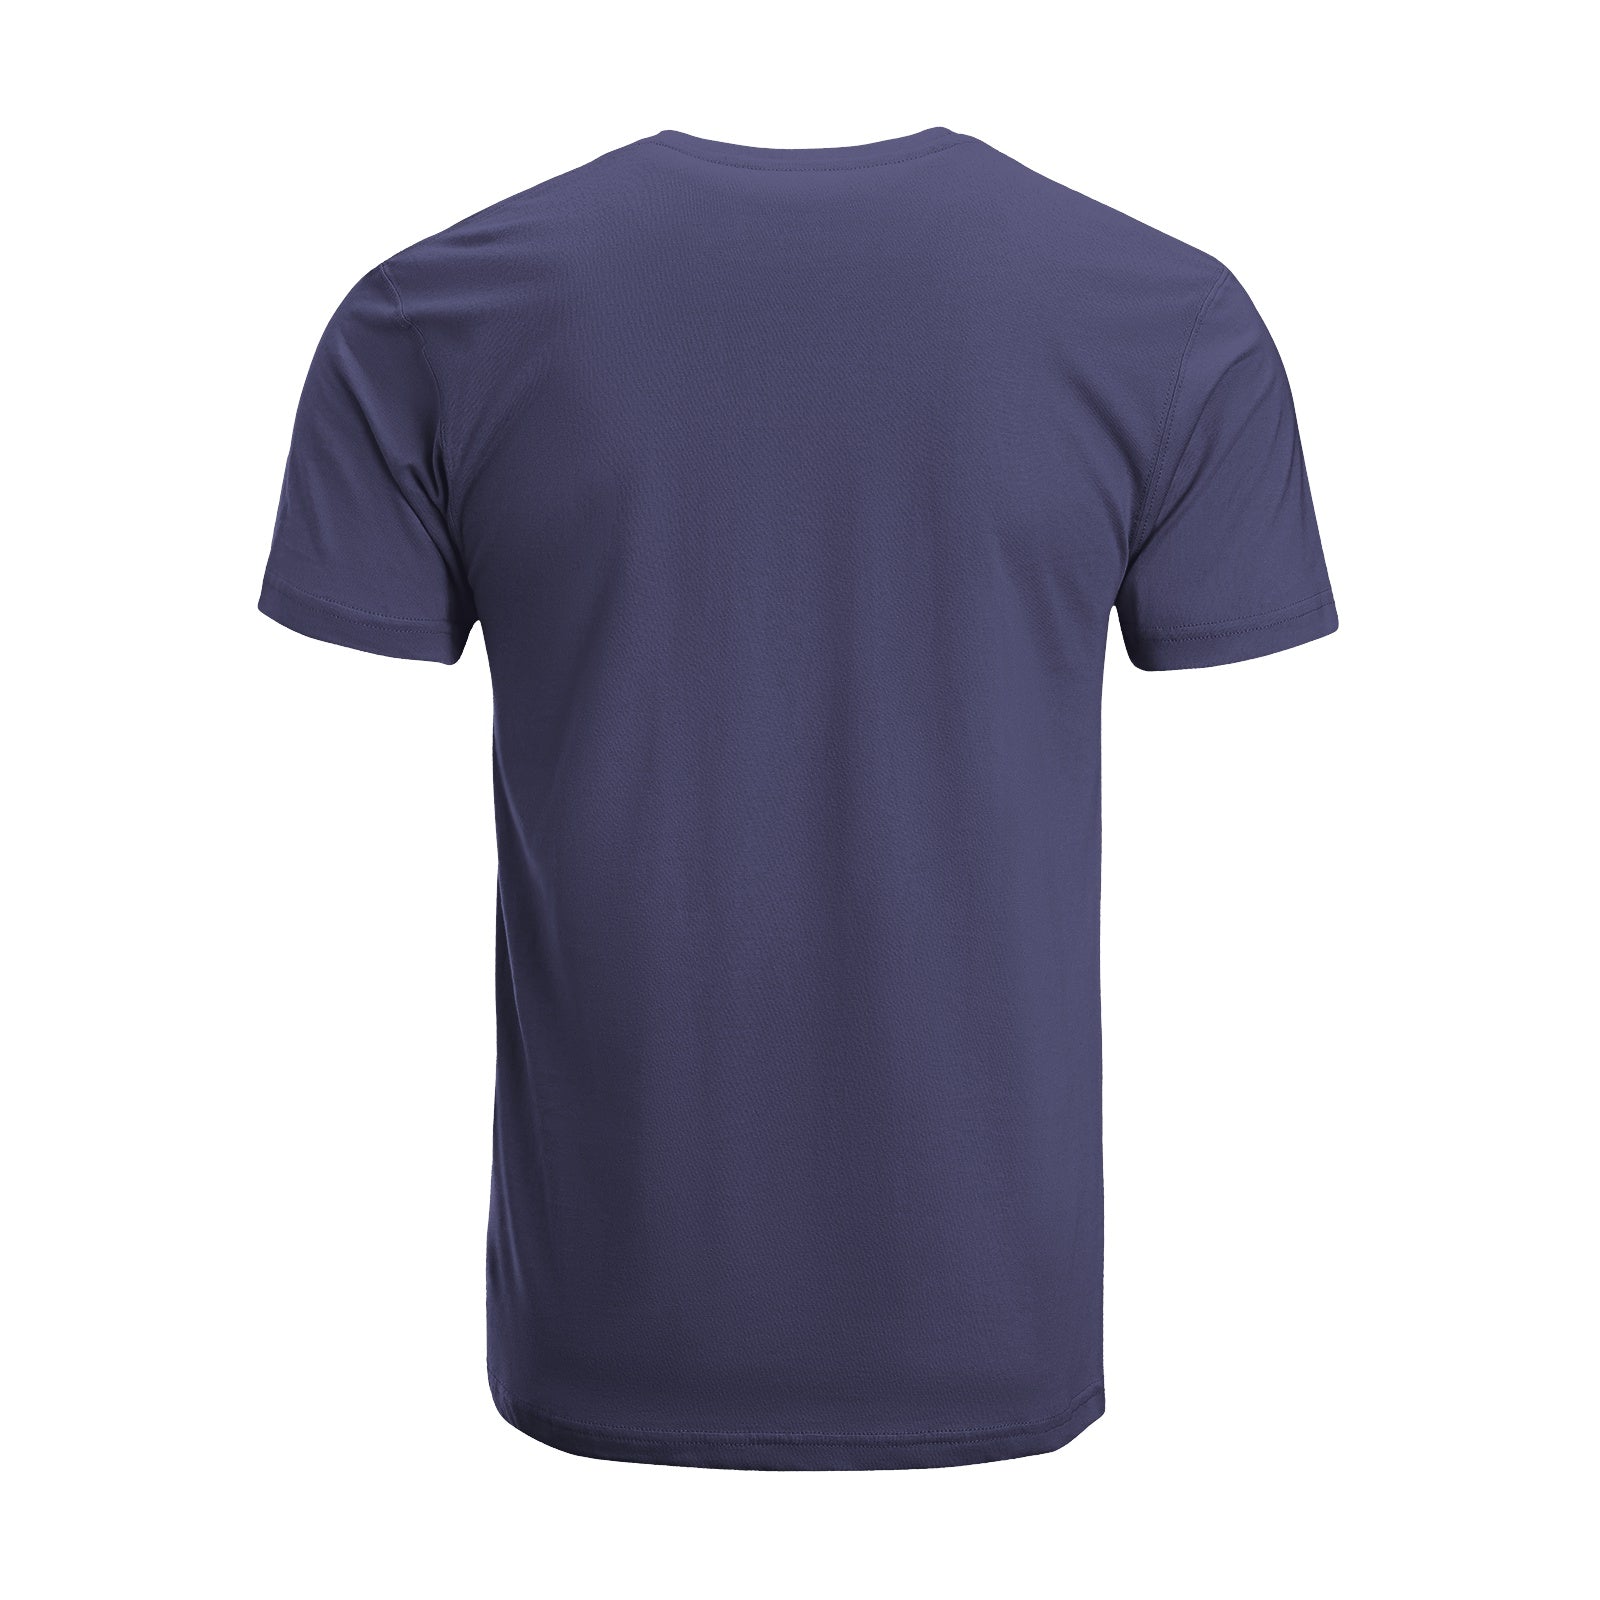 Unisex Short Sleeve Crew Neck Cotton Jersey T-Shirt Gym No. 45 - Tara-Outfits.com